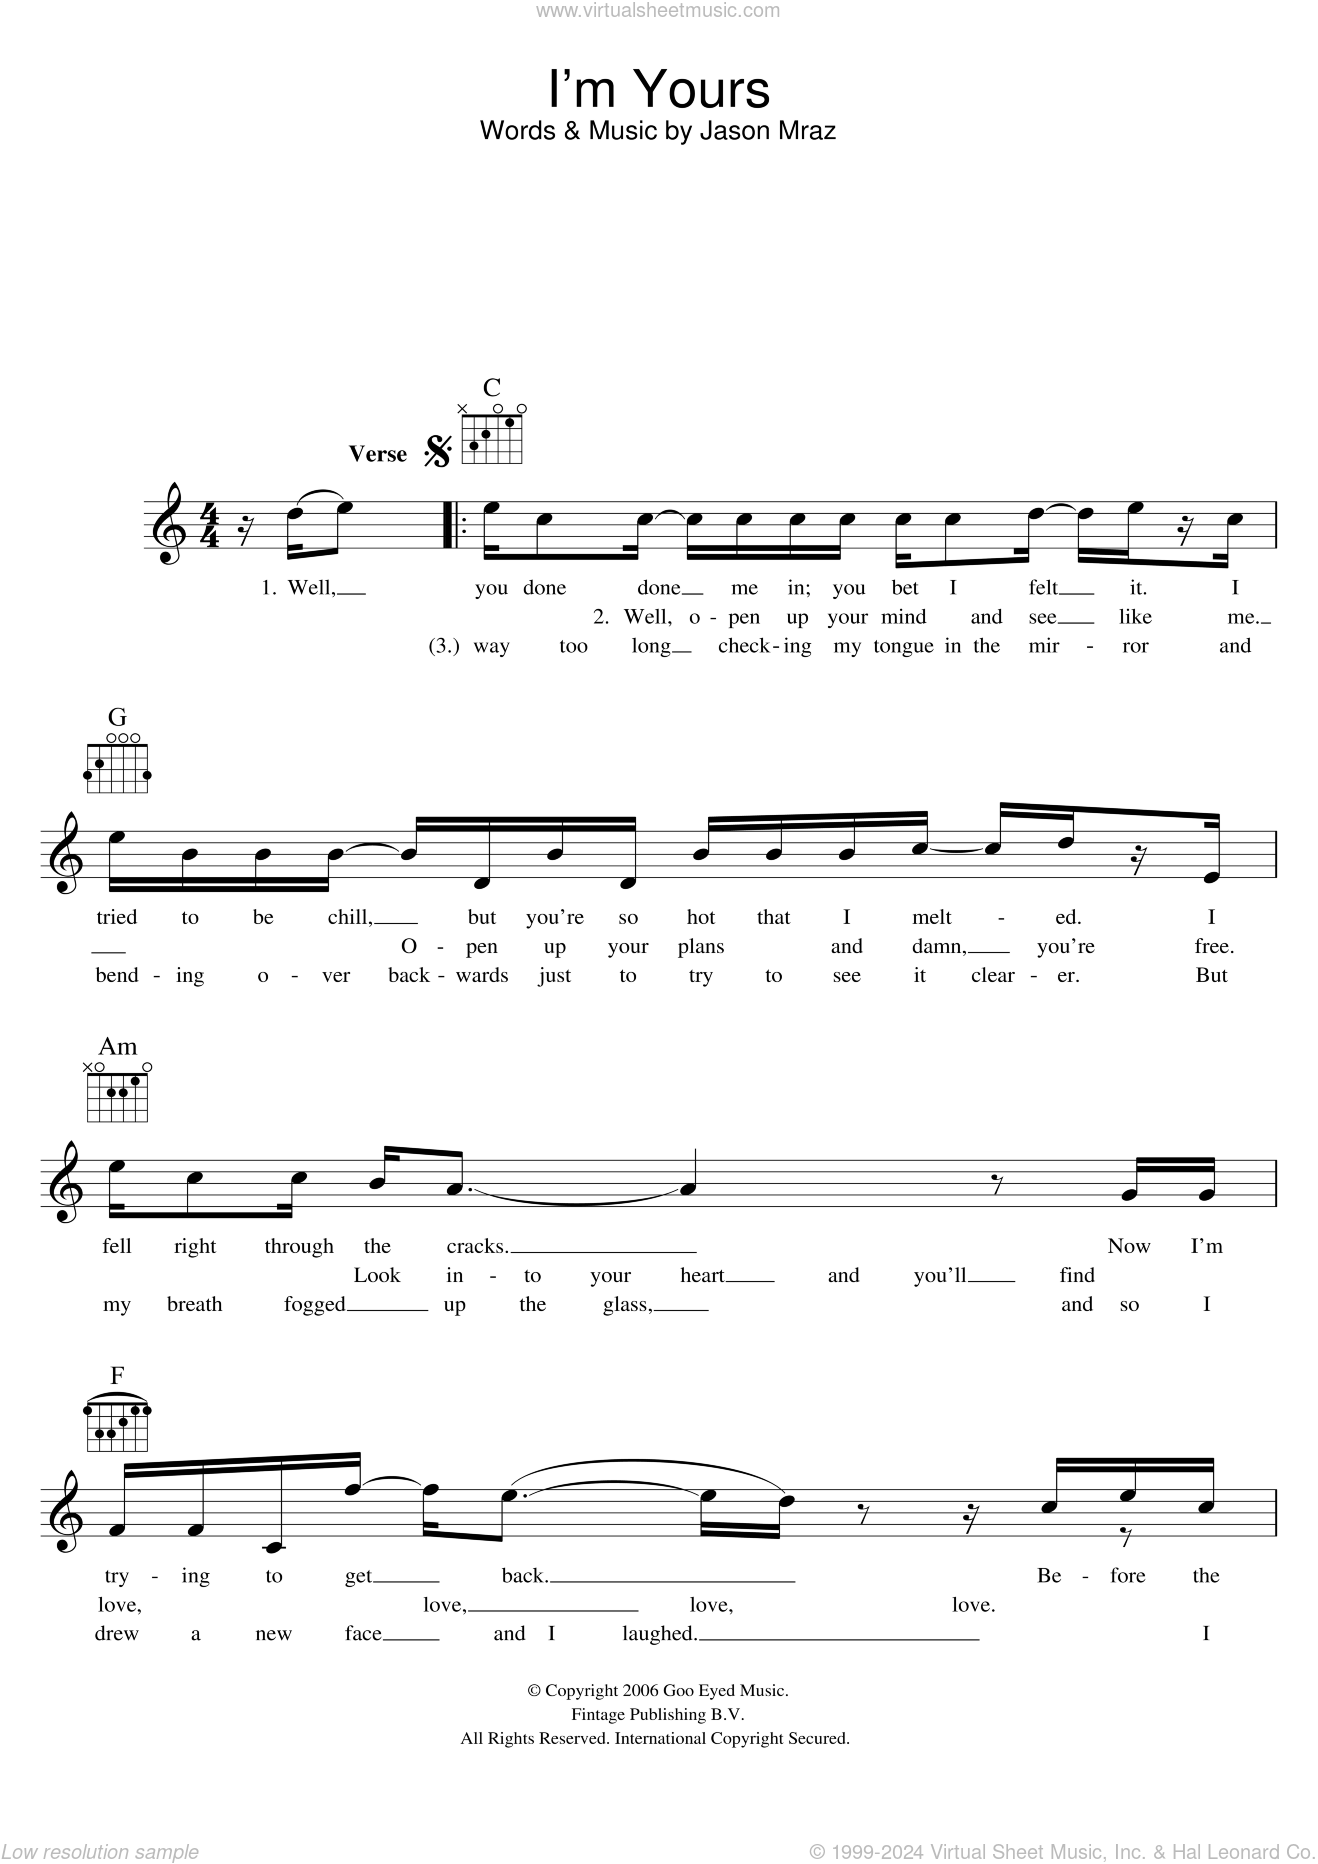 Anton Rubinstein 'Melody' Sheet Music & Chords